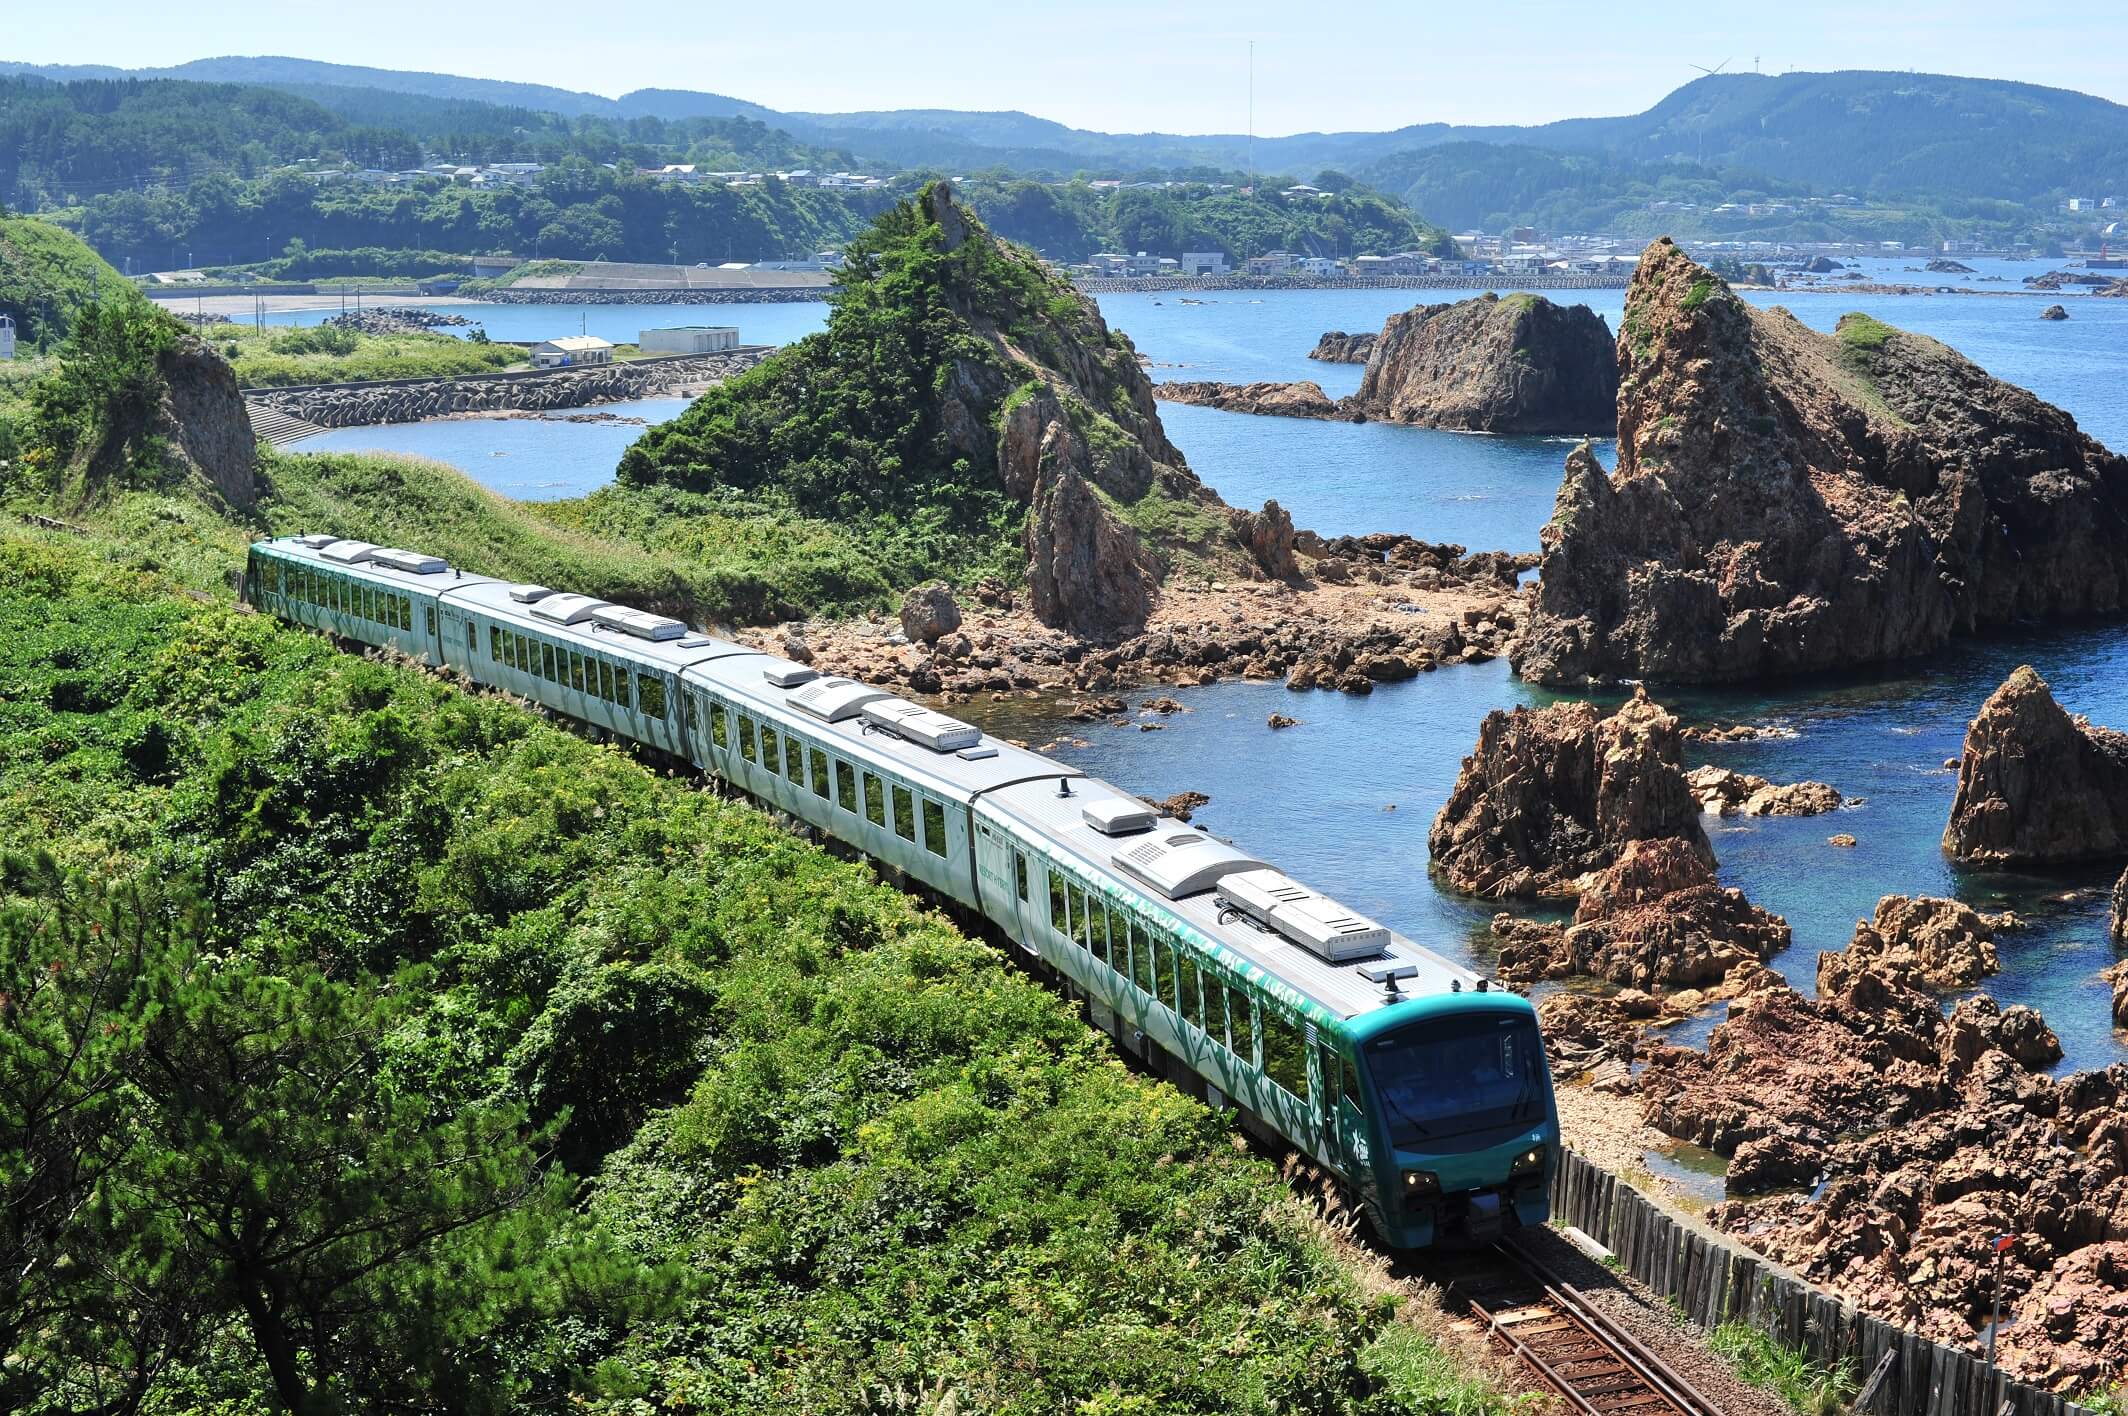 Embark on an unforgettable journey across Japan with the hybrid Resort Shirakami Buna train.